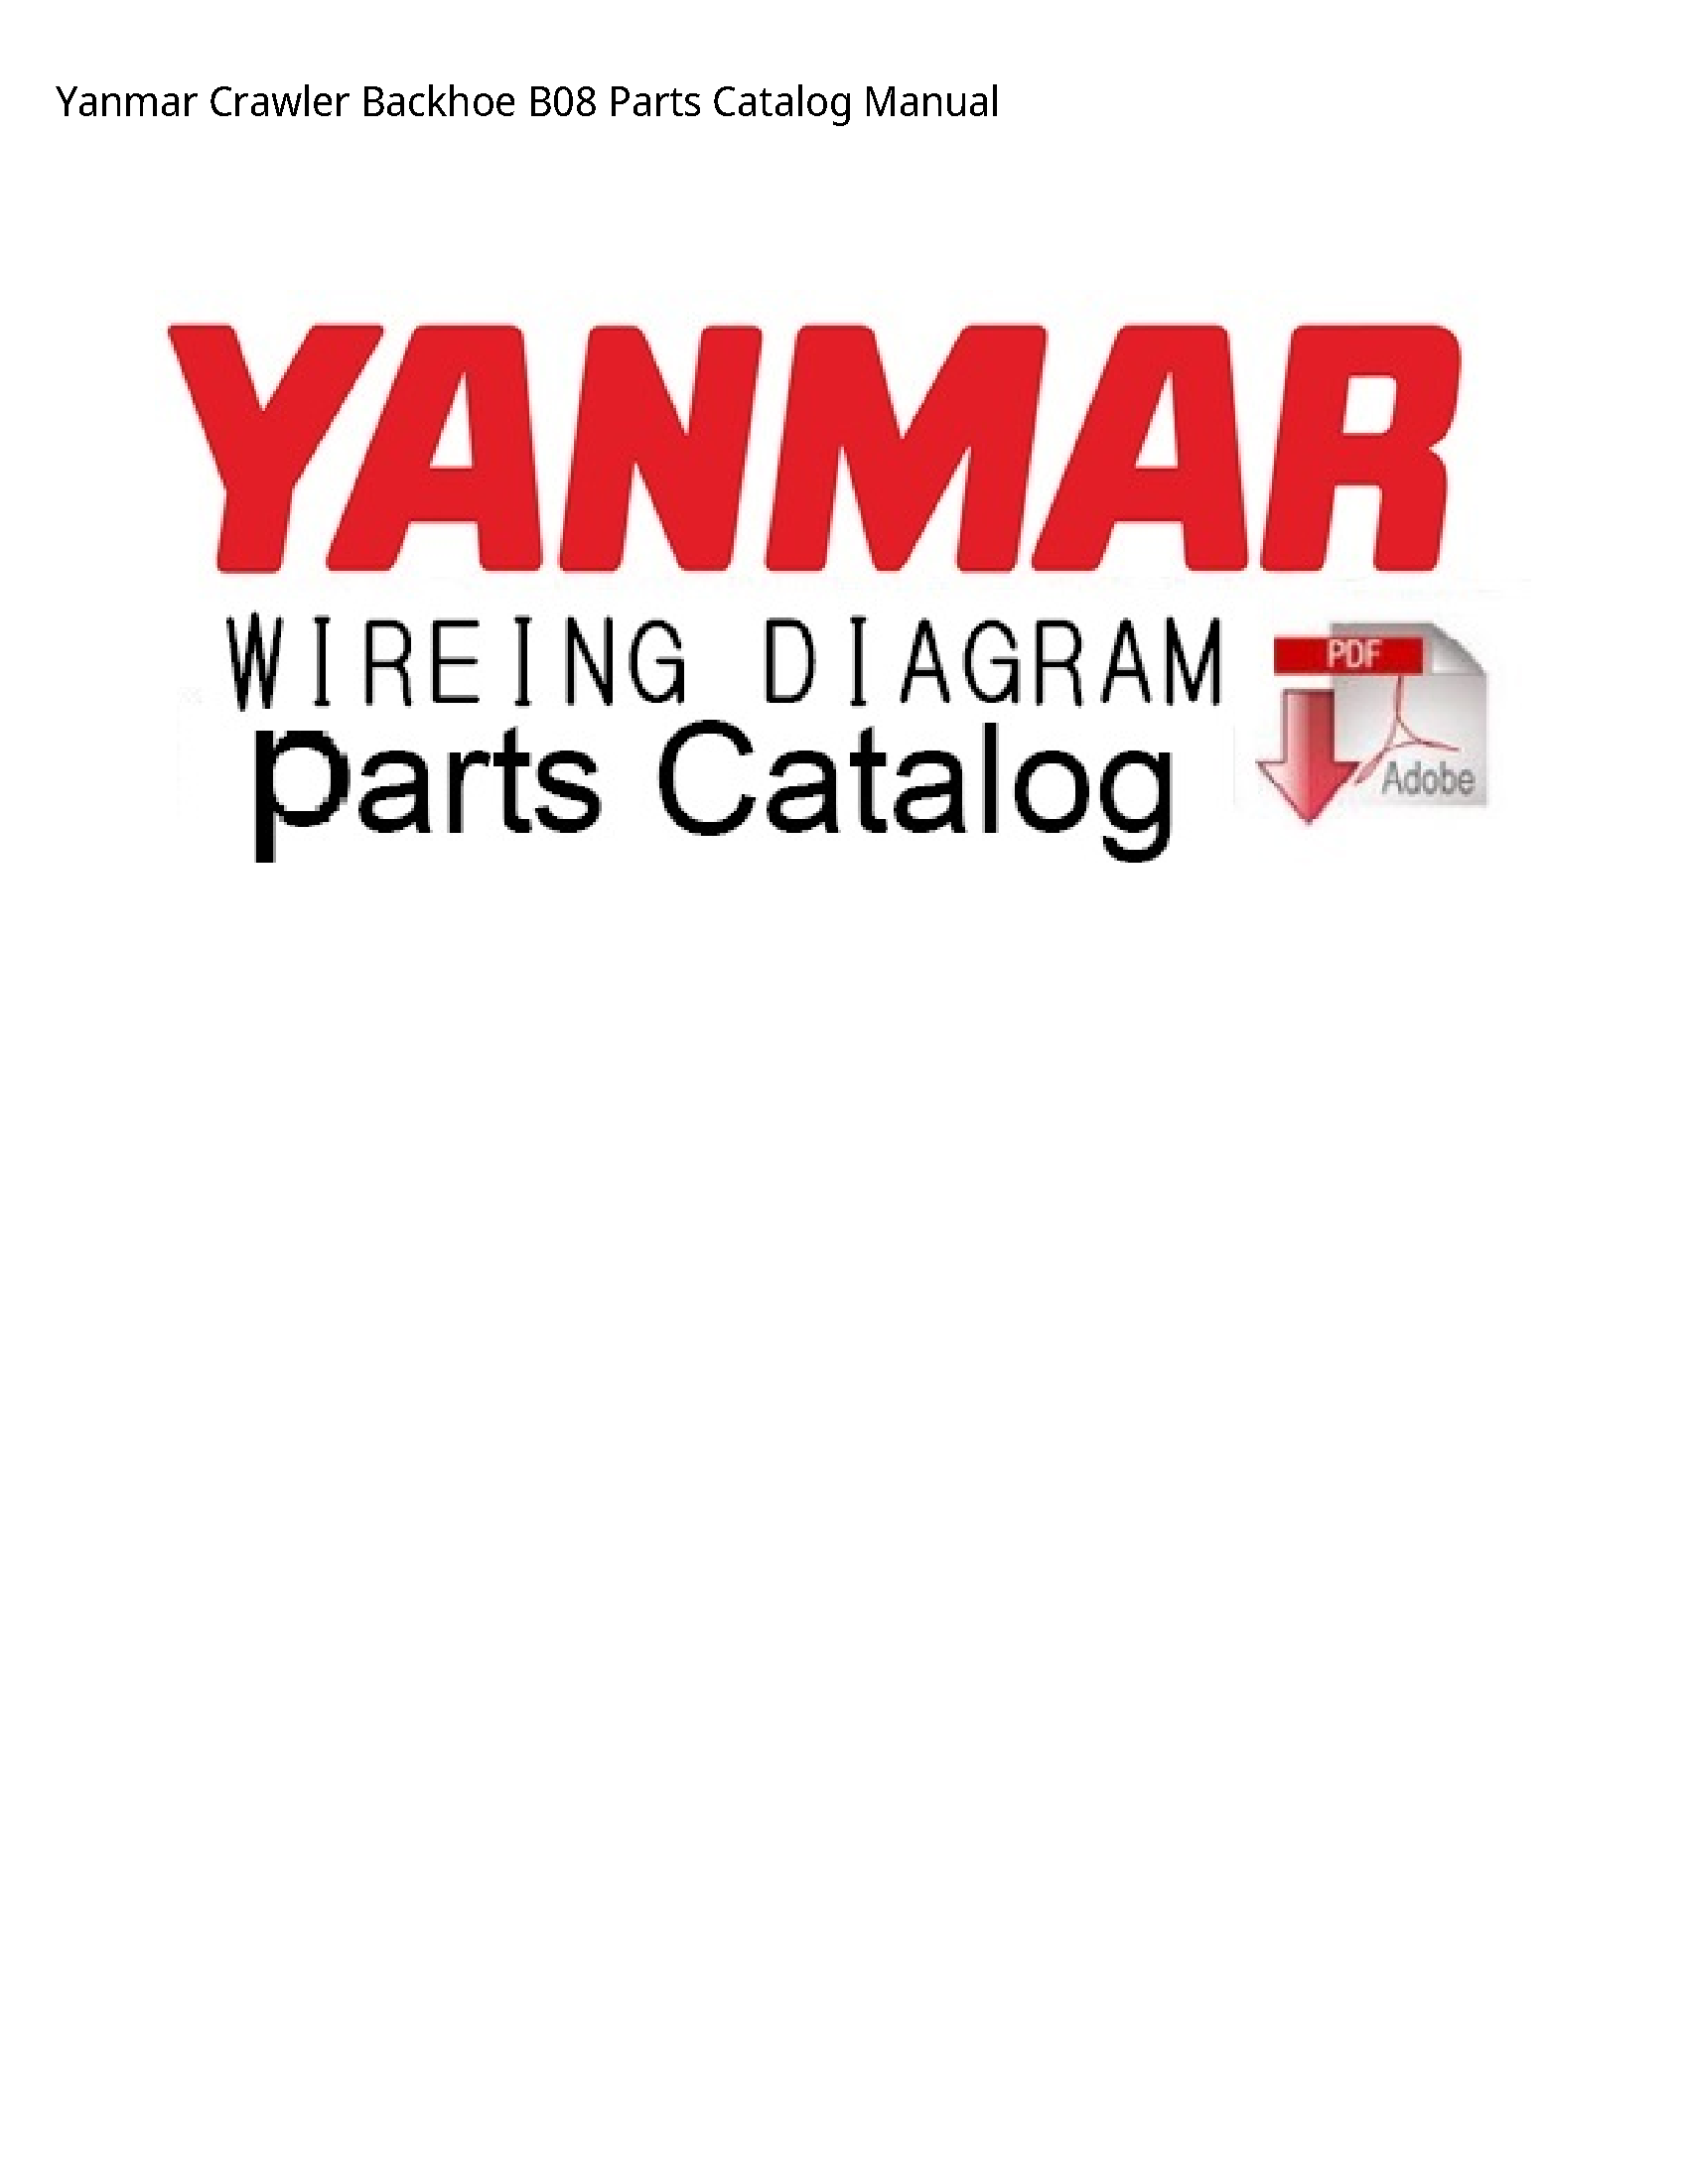 Yanmar B08 Crawler Backhoe Parts Catalog manual